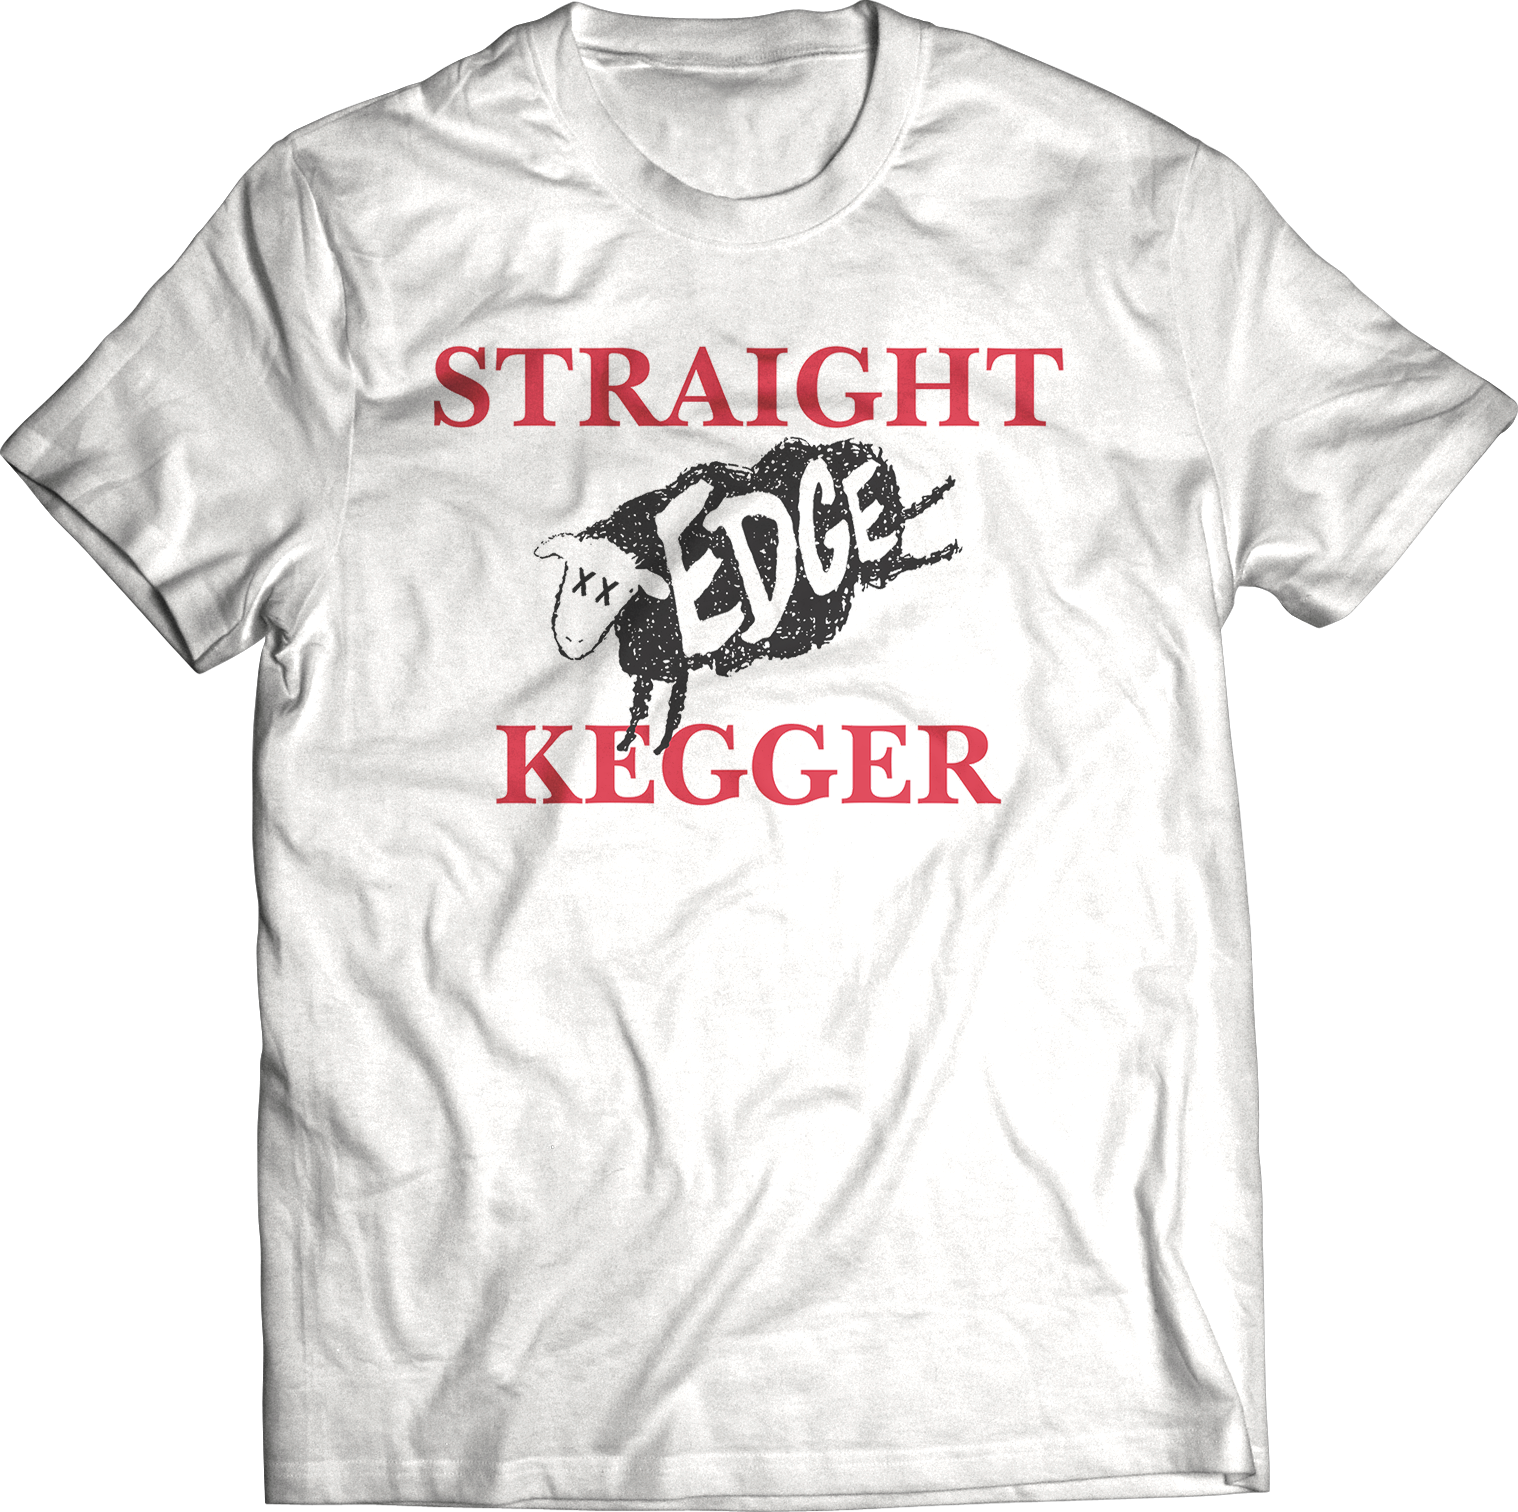 STRAIGHT EDGE KEGGER "OUT OF EDGE" T-SHIRT